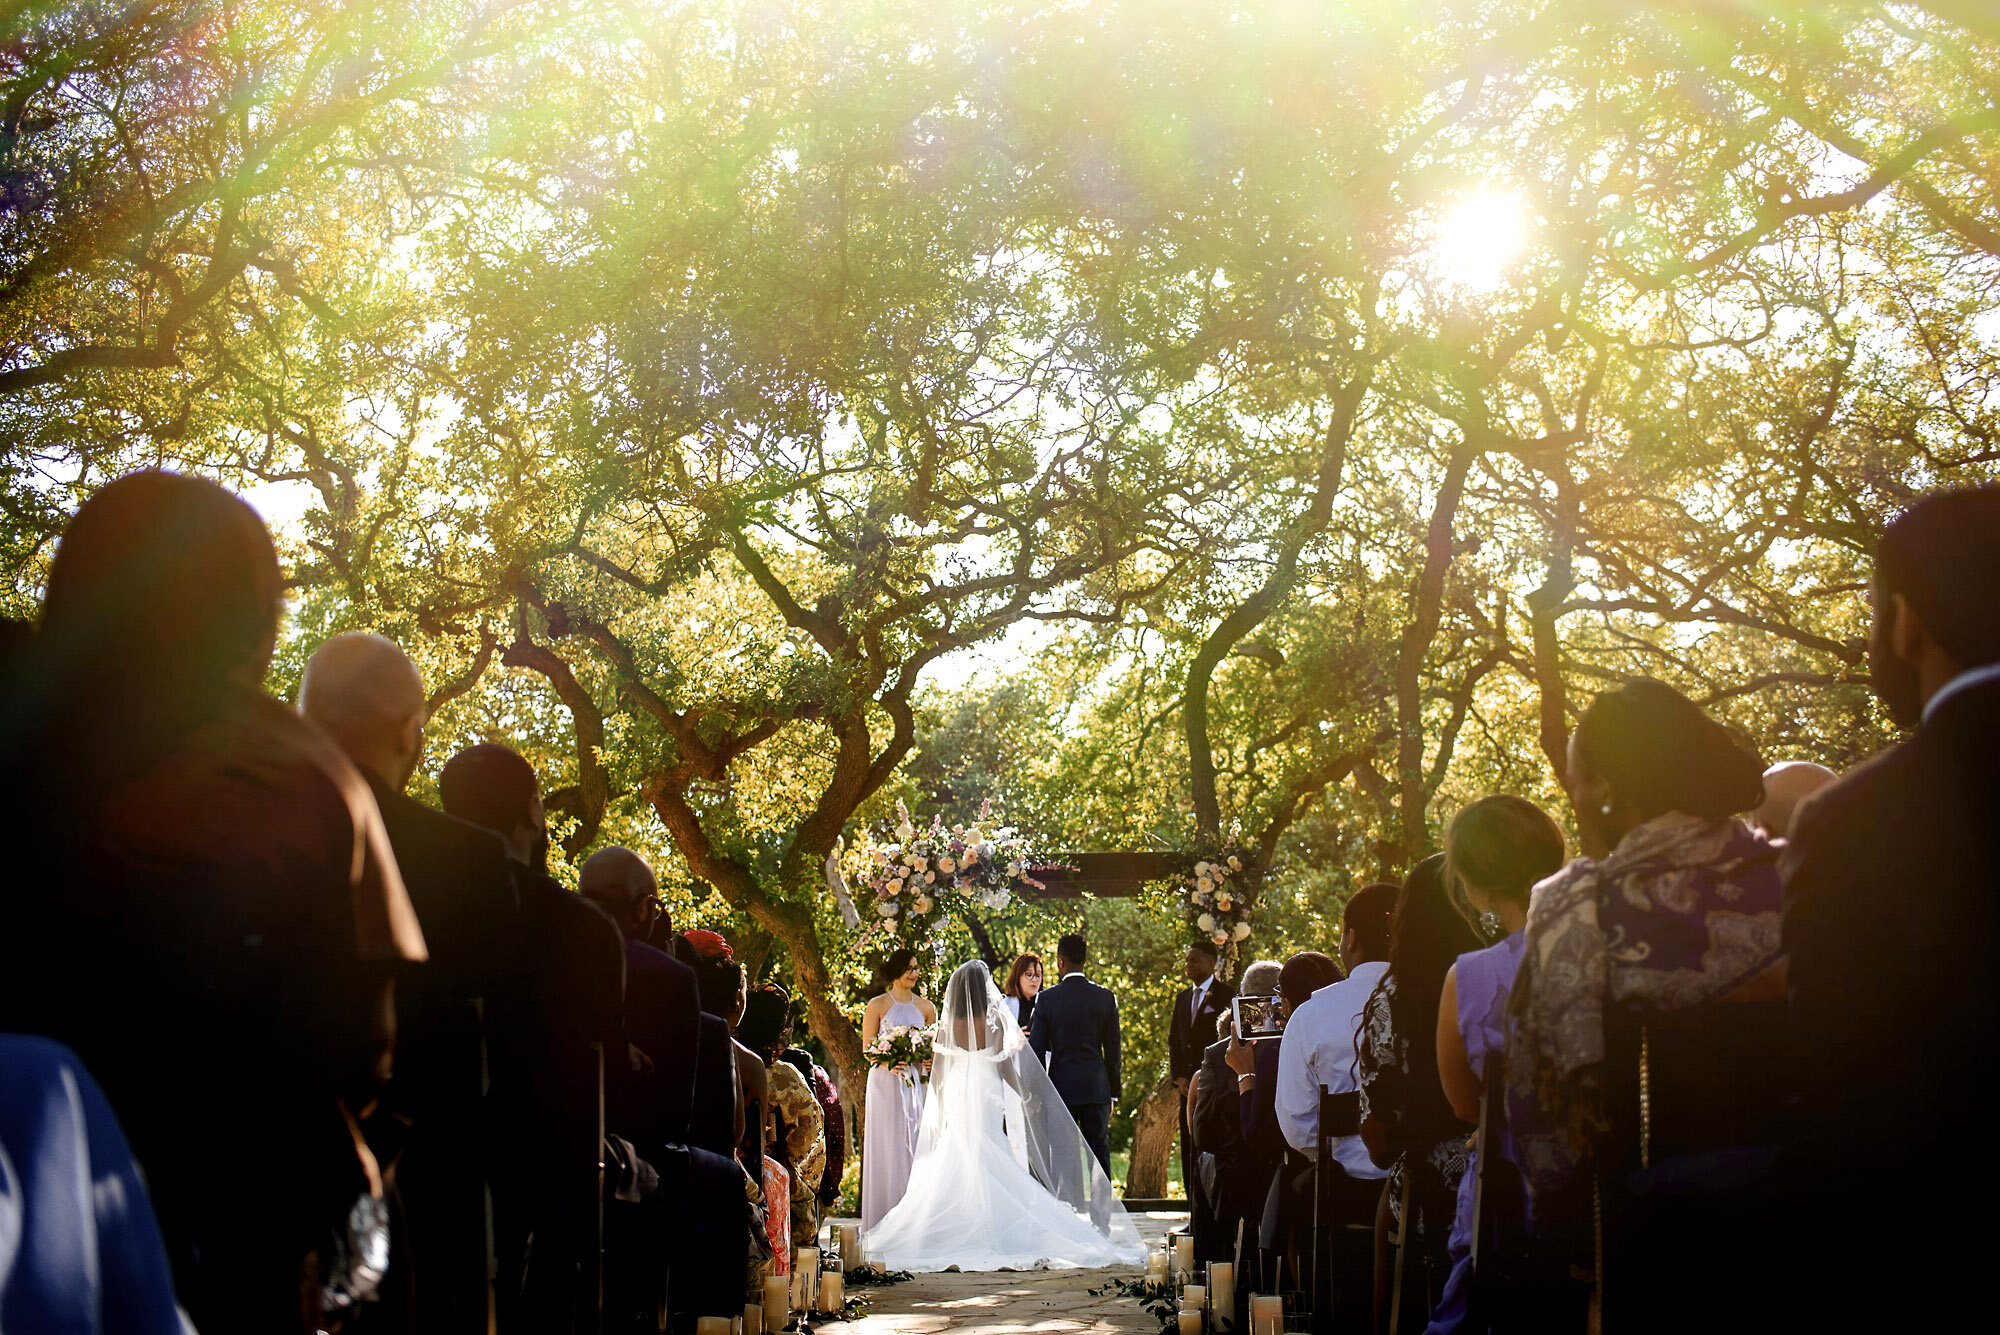 25-Austin-wedding-photographer-Jide-Alakija-far view of the wedding ceremony.jpg.JPG